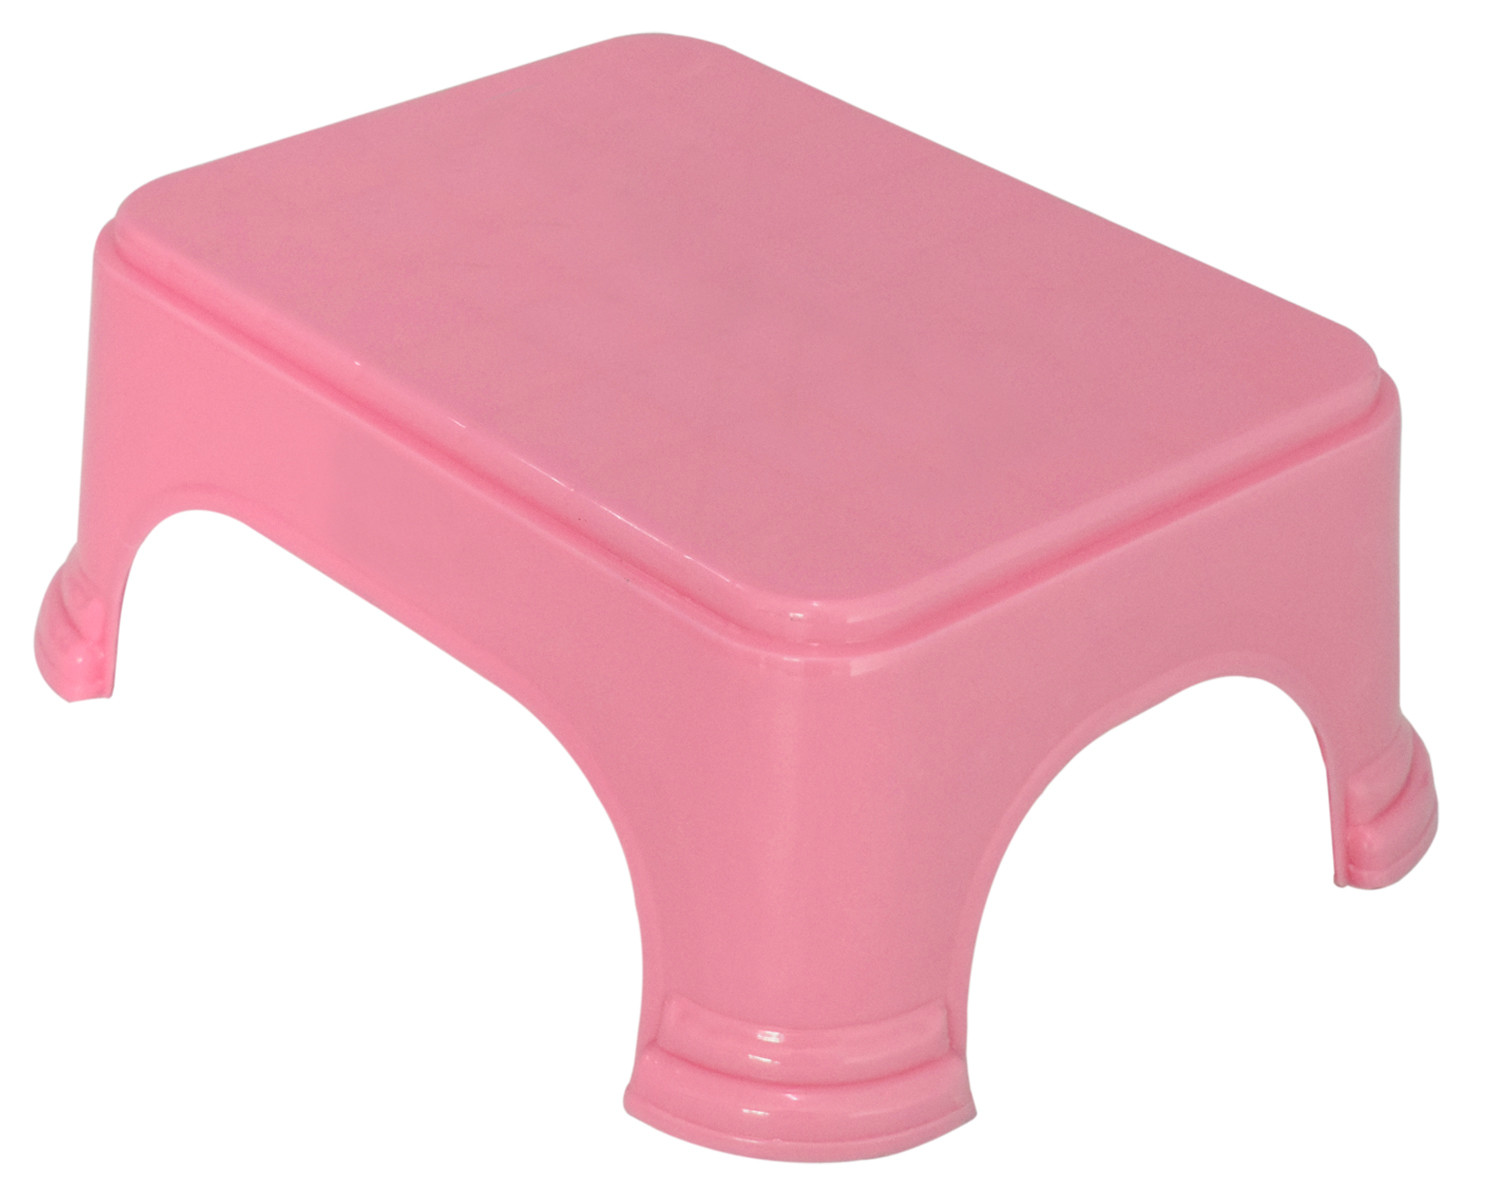 Kuber Industries 2 Pieces Unbreakable Virgin Plastic Multipurpose Bathroom Stool & Mug Set (Pink)